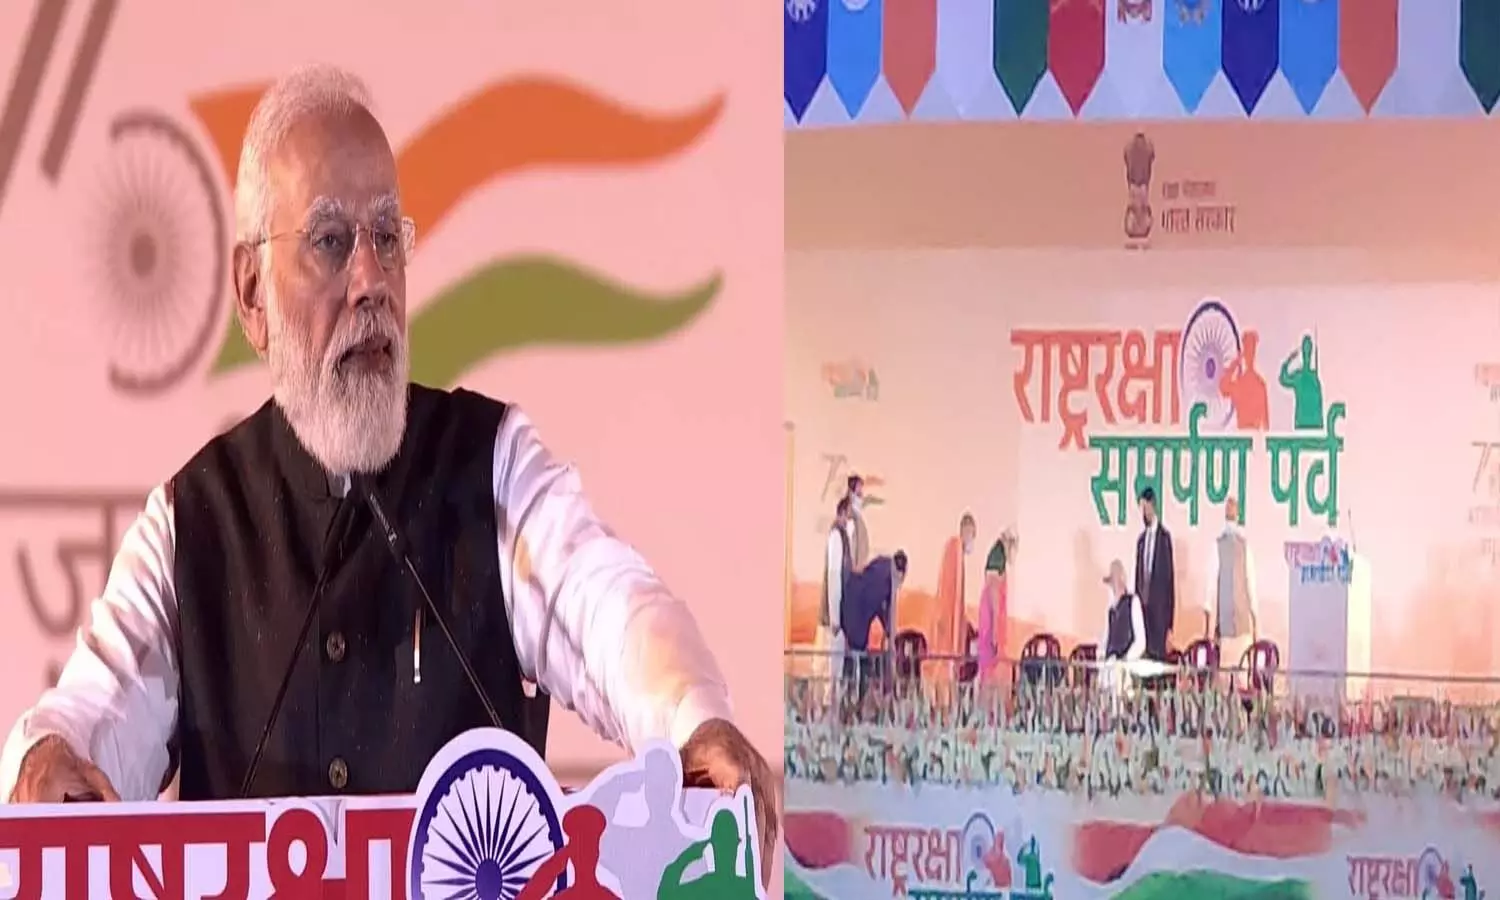 PM Modi Jhansi Visit: 3,425 crore gift to Jhansi: PM Modi said, work on making armies self-reliant